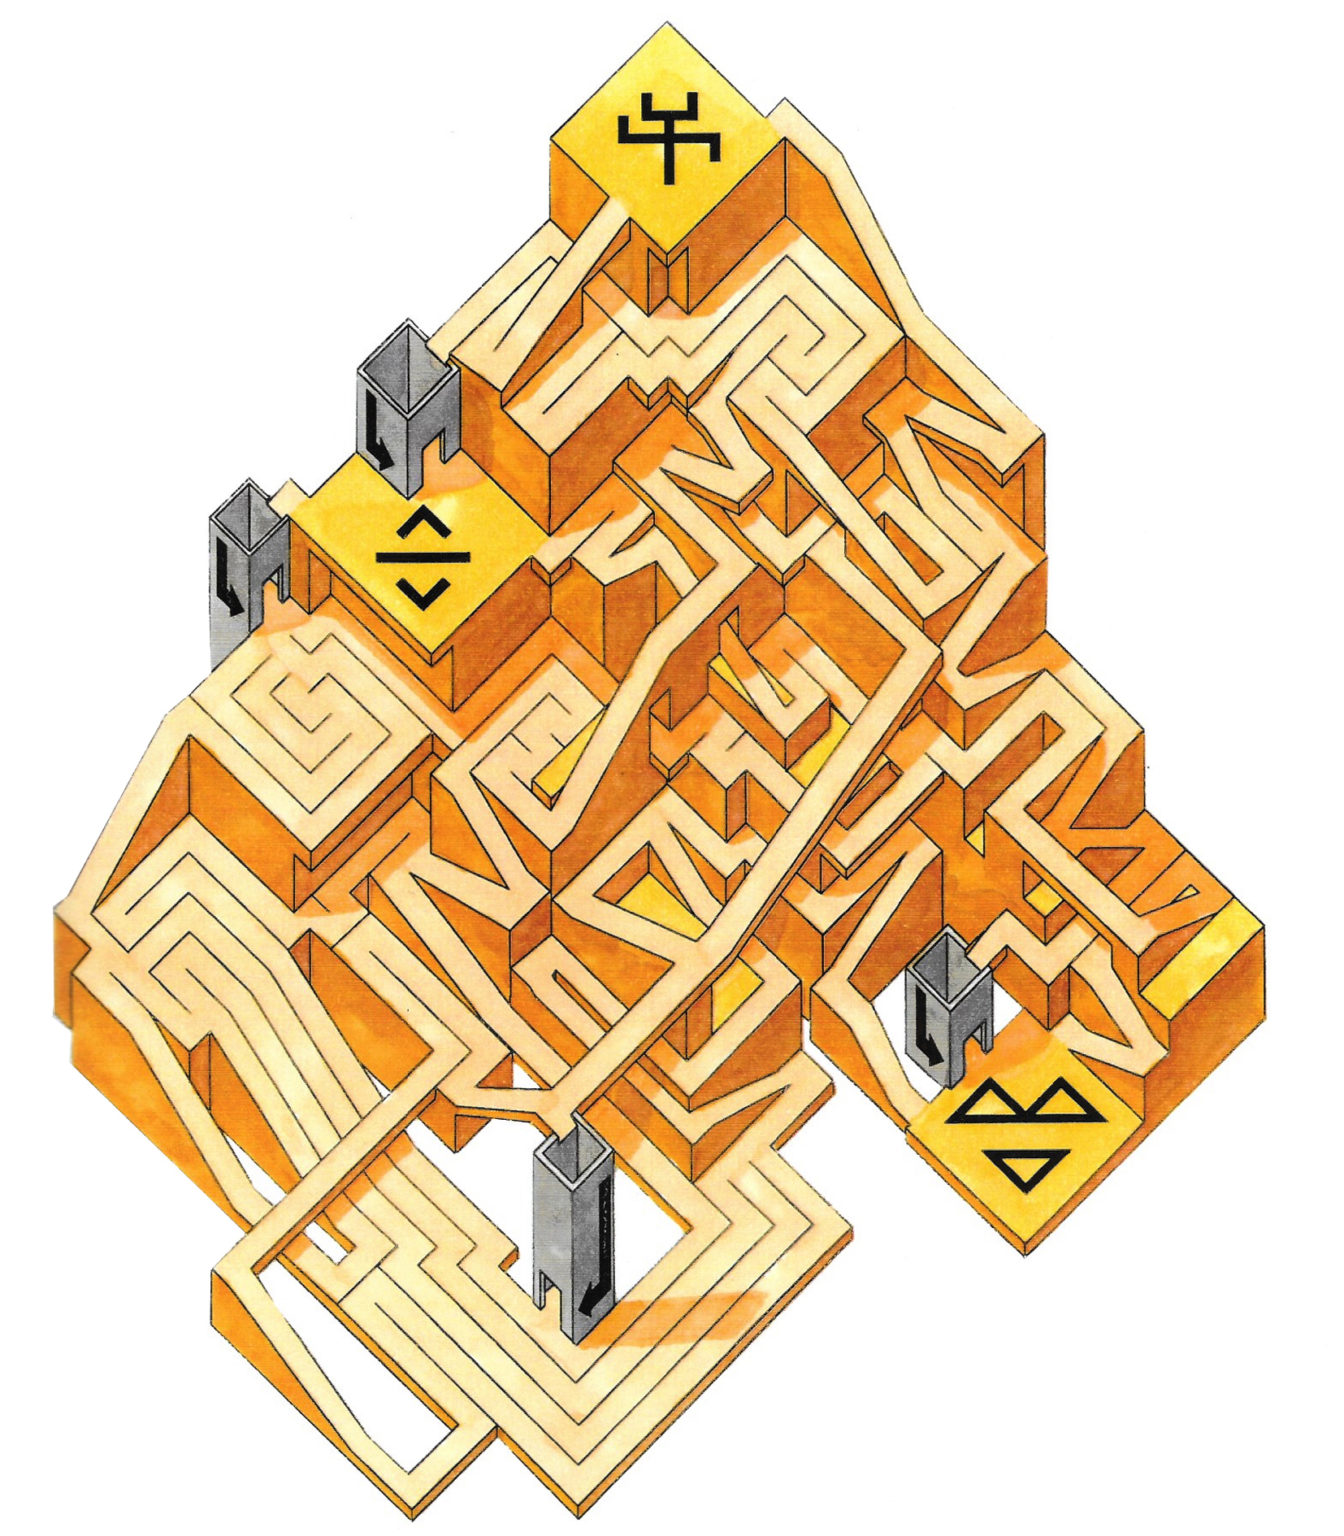 rpg maker mv 3d labyrinth